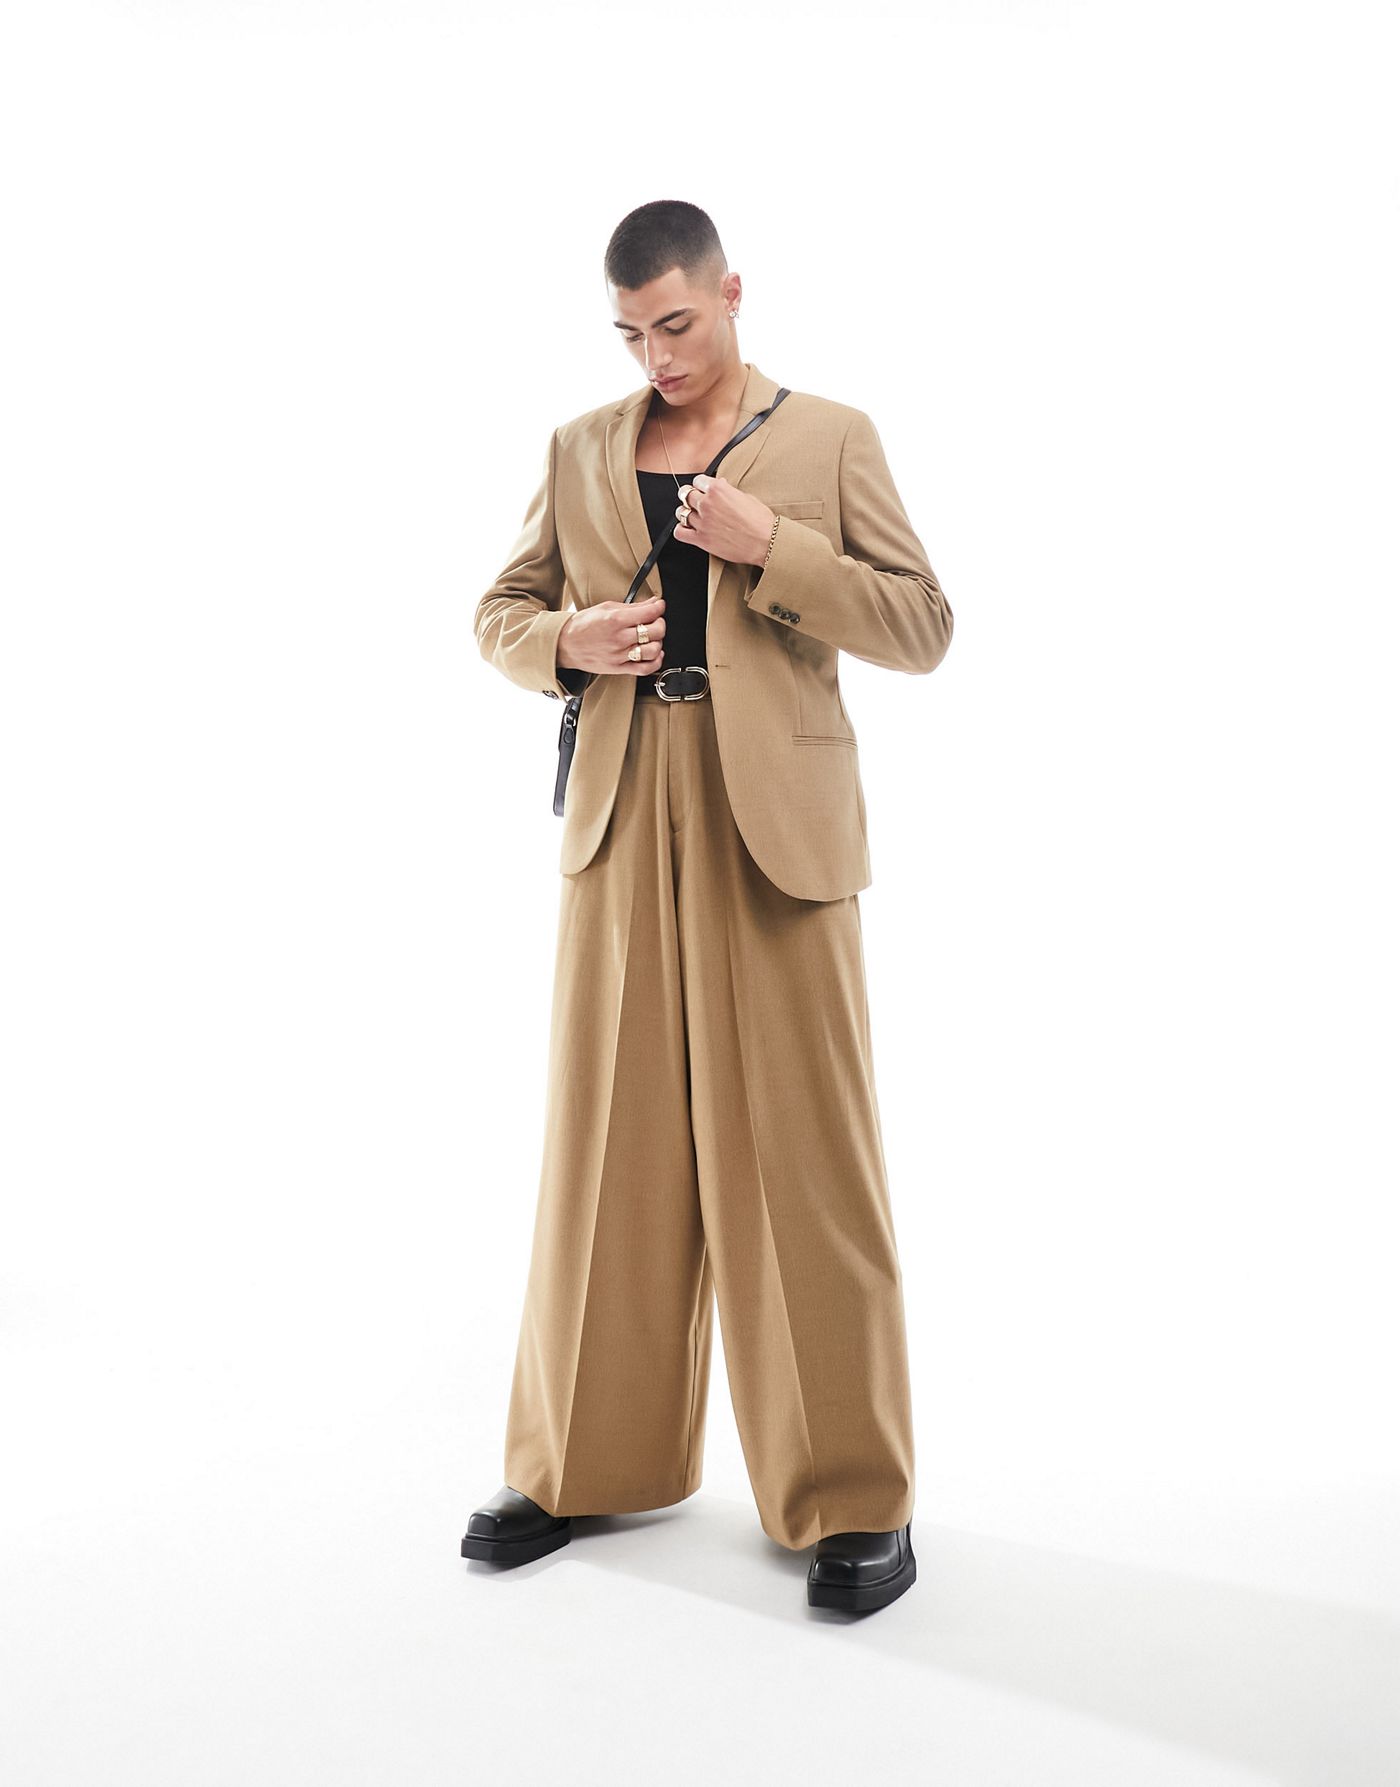 ASOS DESIGN skinny suit jacket in camel in micro texture